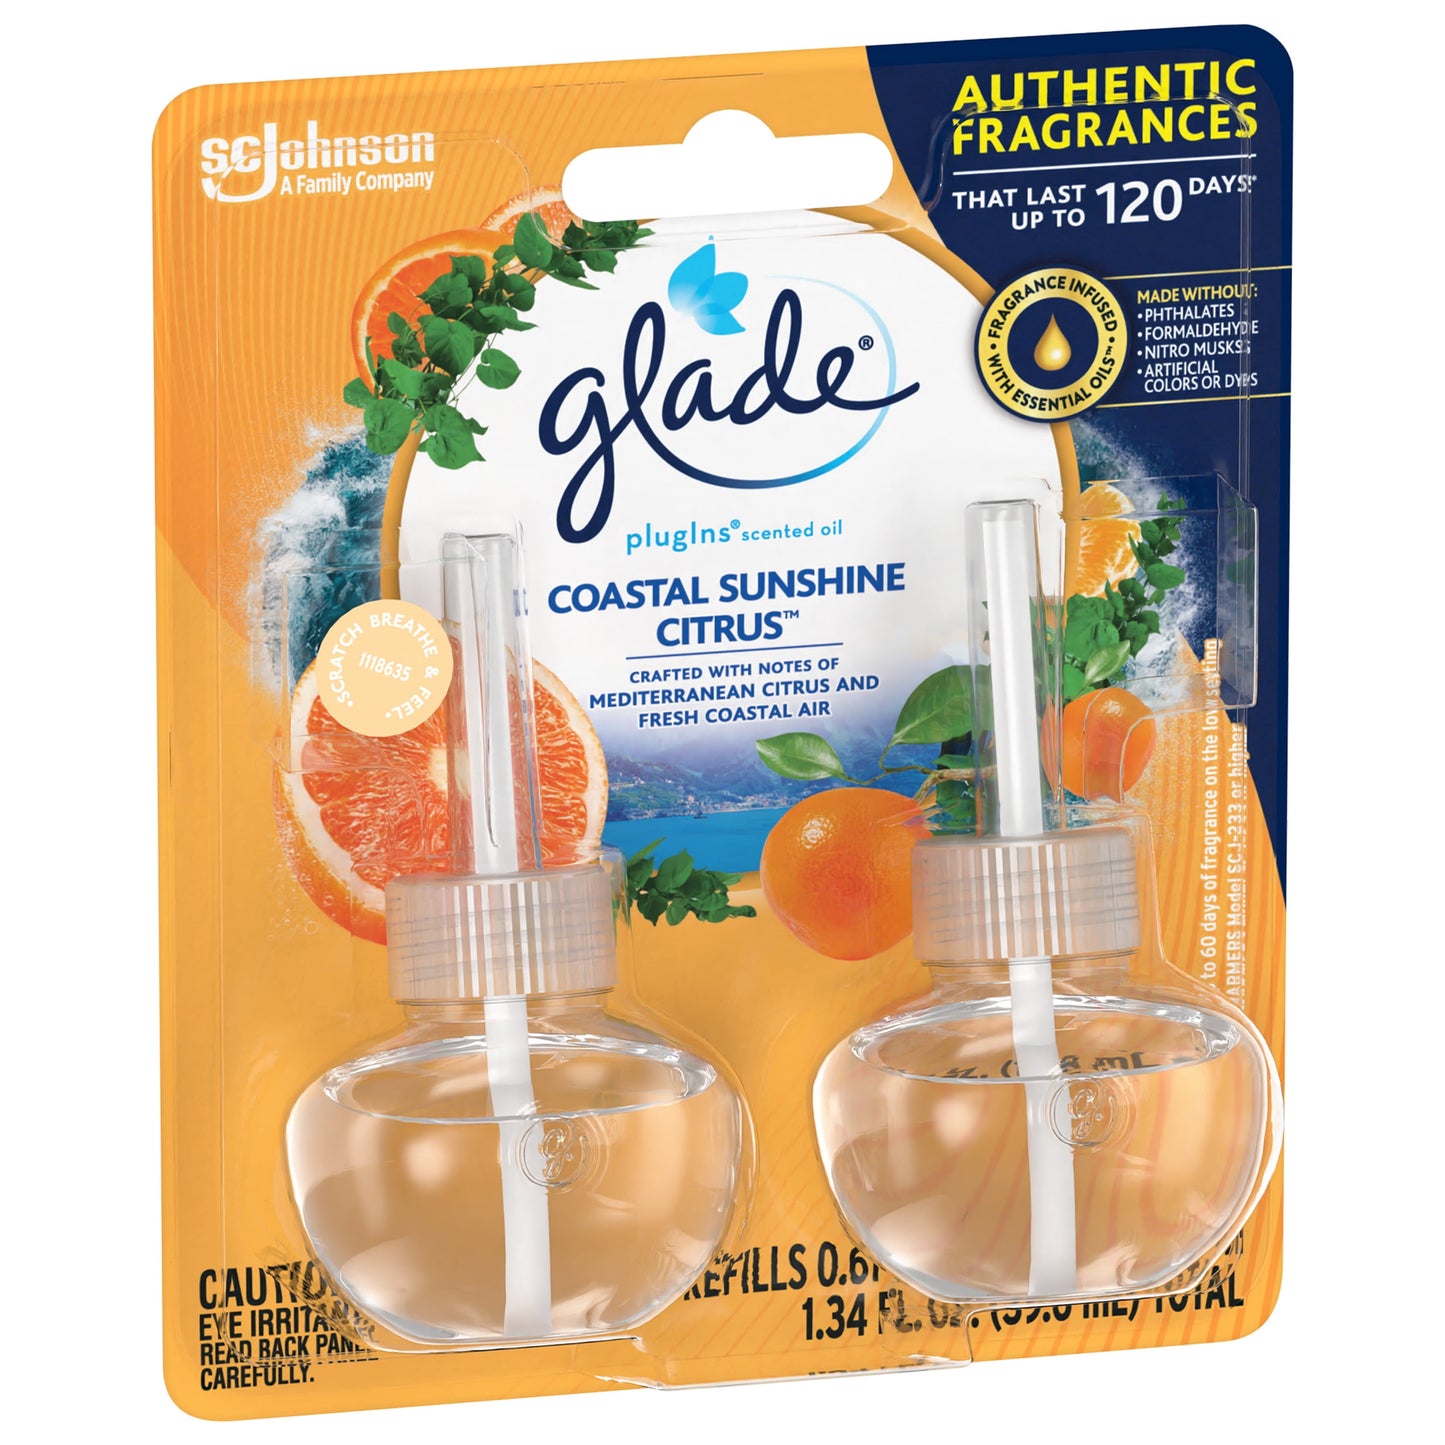 Glade PlugIns Scented Oil 2 Refills, Glade Plug in refills, Air Freshener, Coastal Sunshine Citrus™, 2 x 0.67 oz